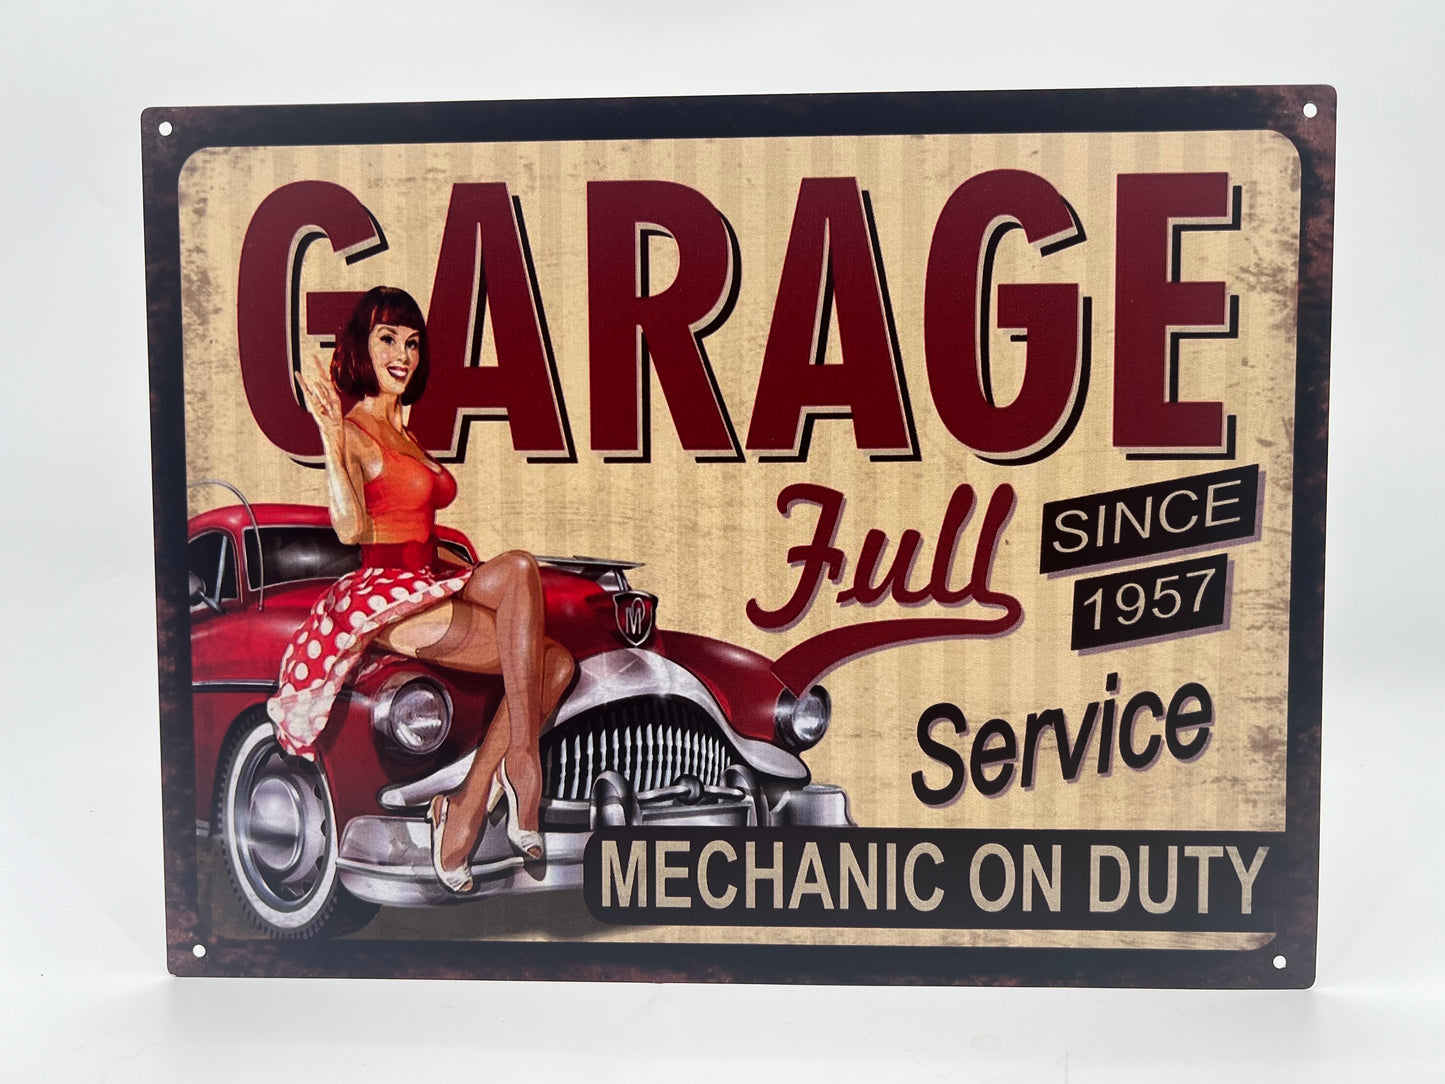 Blechschild "Garage Full Service"